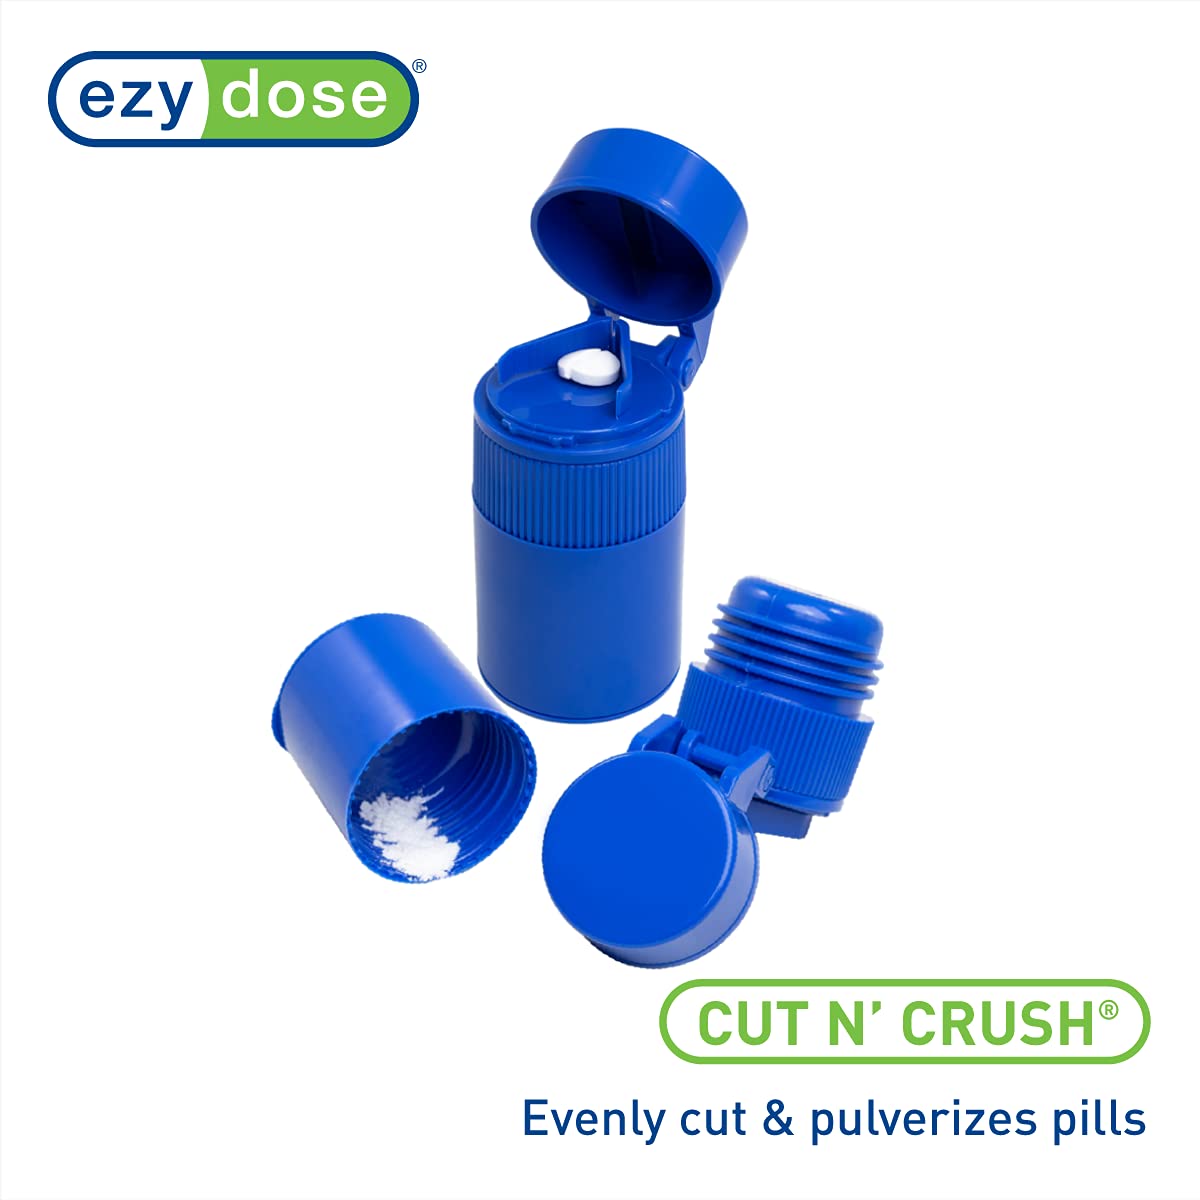 EZY DOSE Cut N' Crush │ Pill Cutter│ Pill Crusher, Blue, 1 Count (Pack of 1), 67750